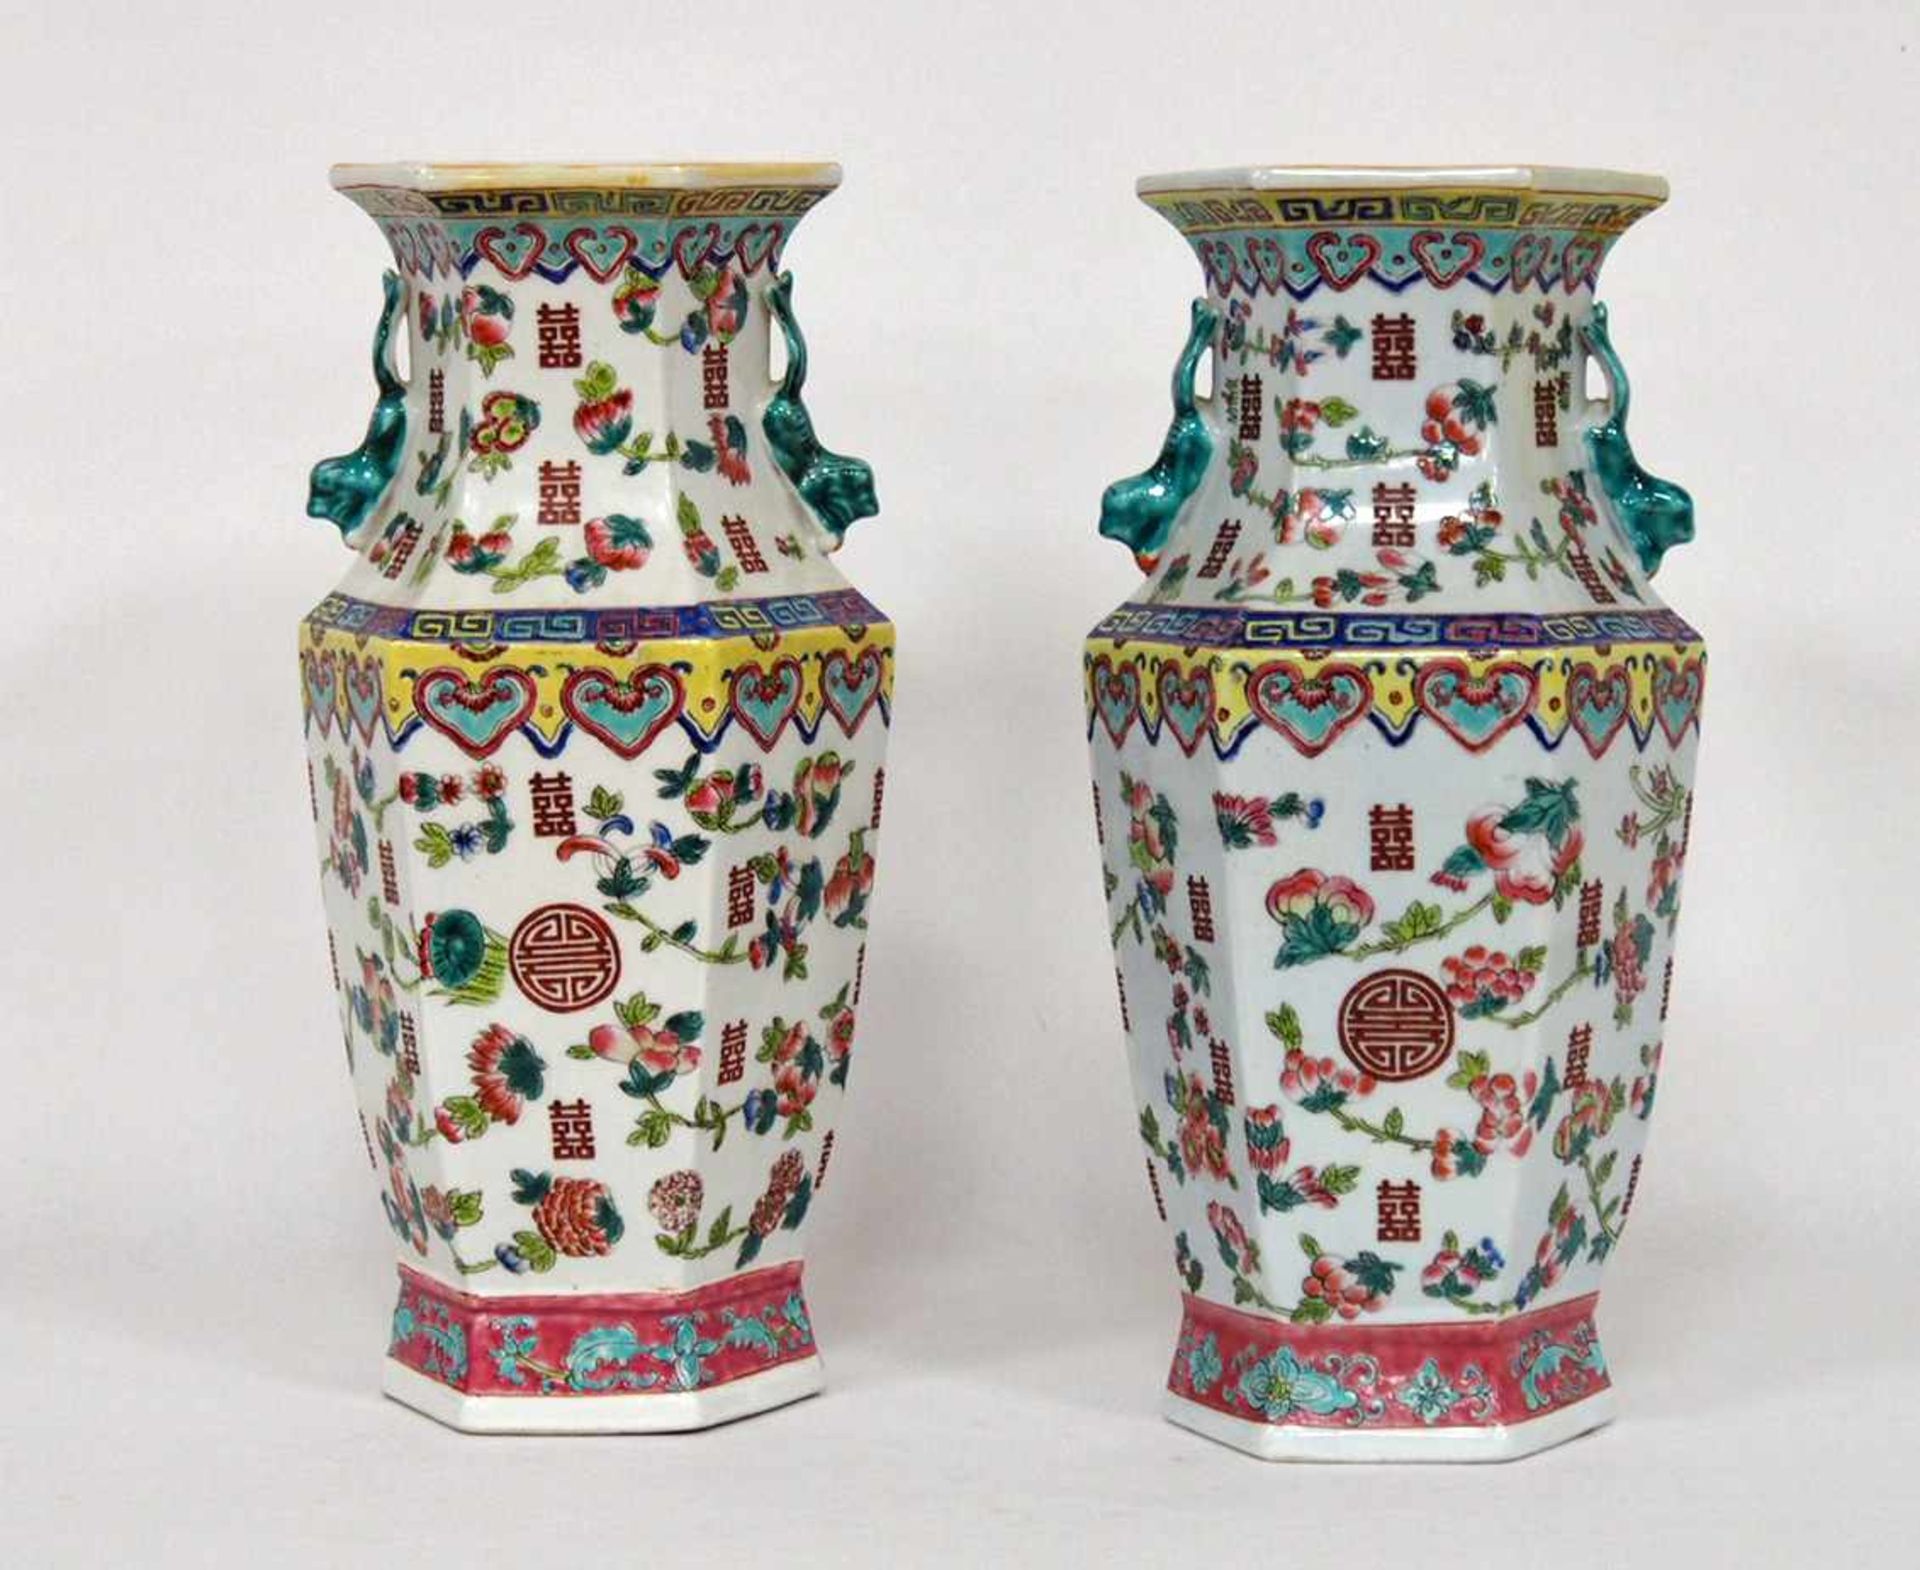 Paar Vasen, China, um 1900Porzellan, Blumenmalerei, Höhe 37 cm